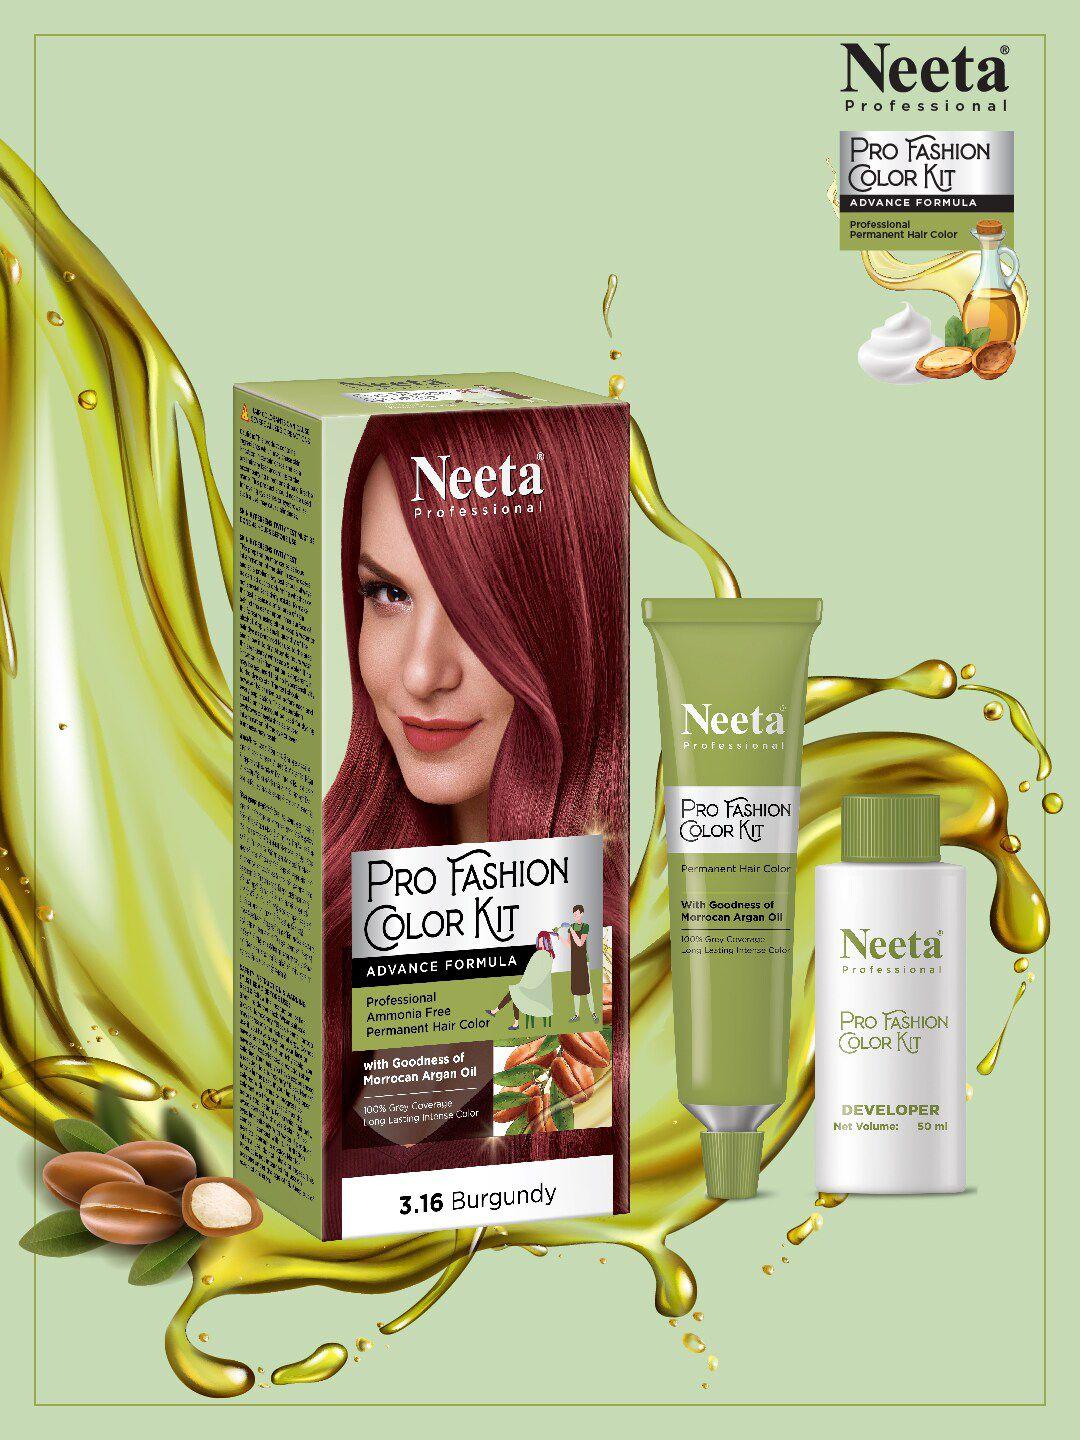 neeta professional pro fashion permanent hair color kit 100g - burgundy 3.16